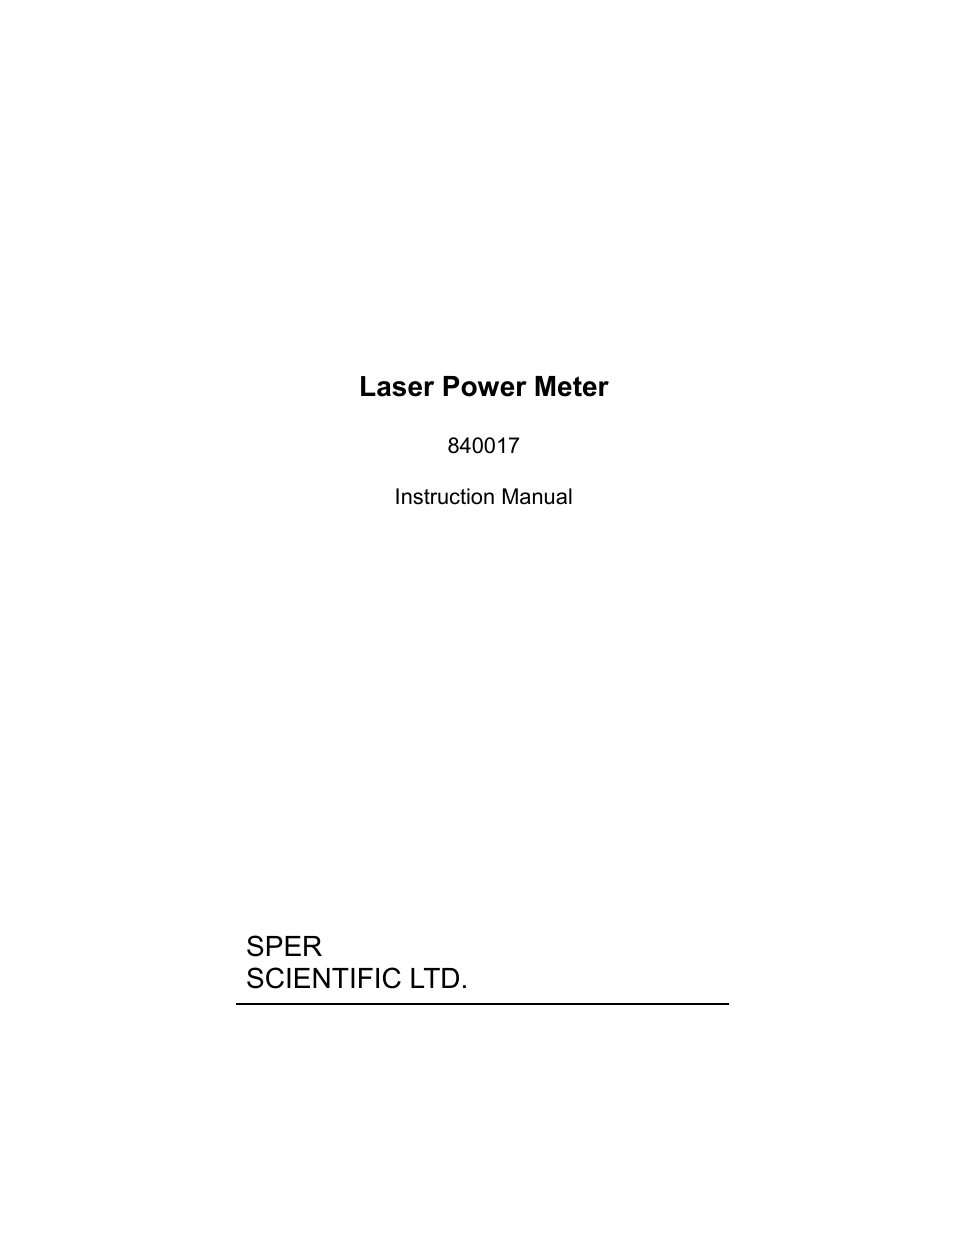 840017 Laser Power Meter